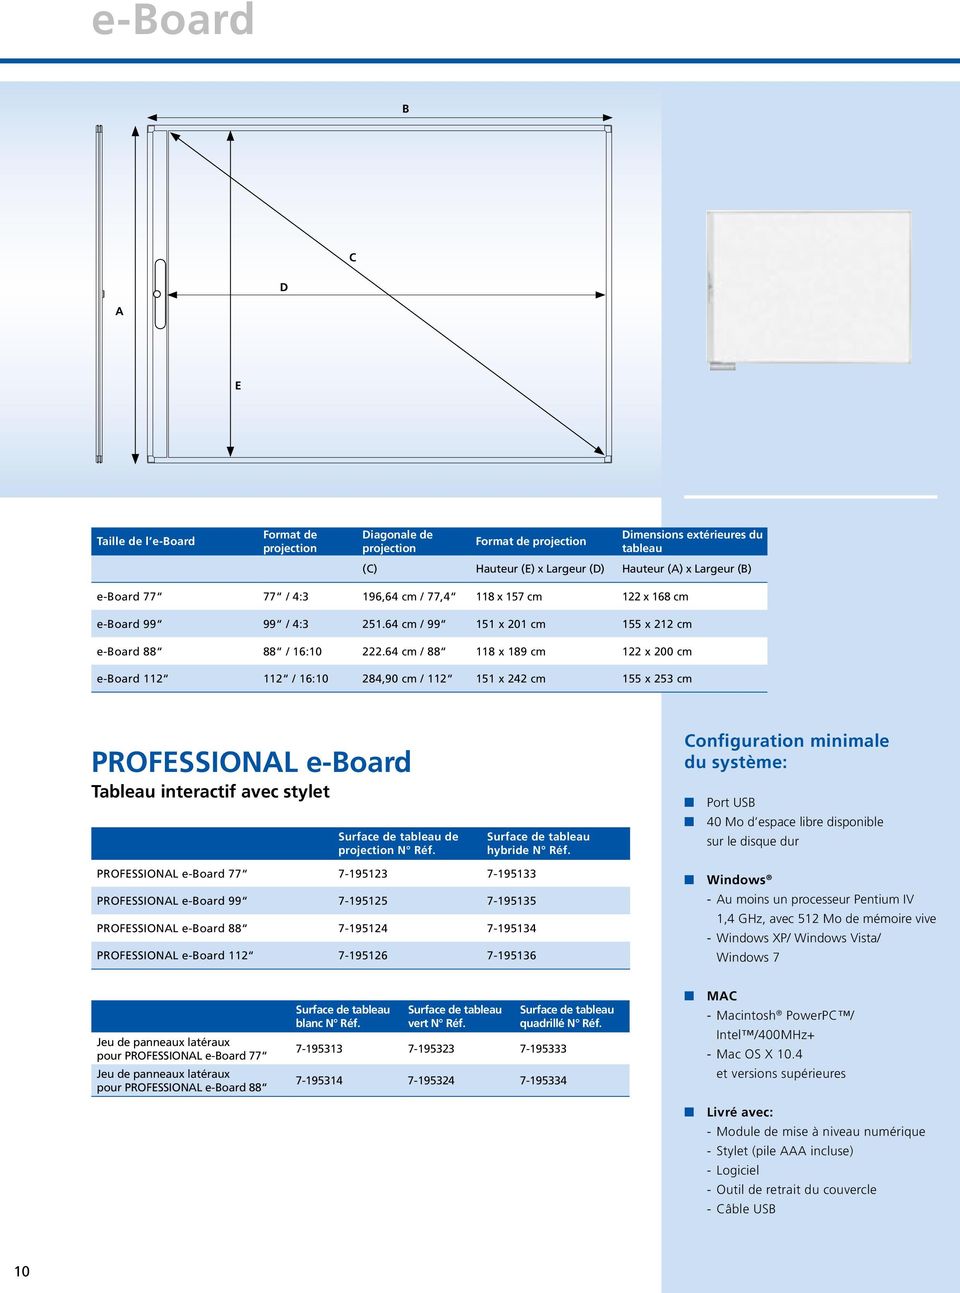 64 cm / 88 118 x 189 cm 122 x 200 cm e-board 112 112 / 16:10 284,90 cm / 112 151 x 242 cm 155 x 253 cm PROFESSIONAL e-board Tableau interactif avec stylet Surface de tableau de projection N Réf.